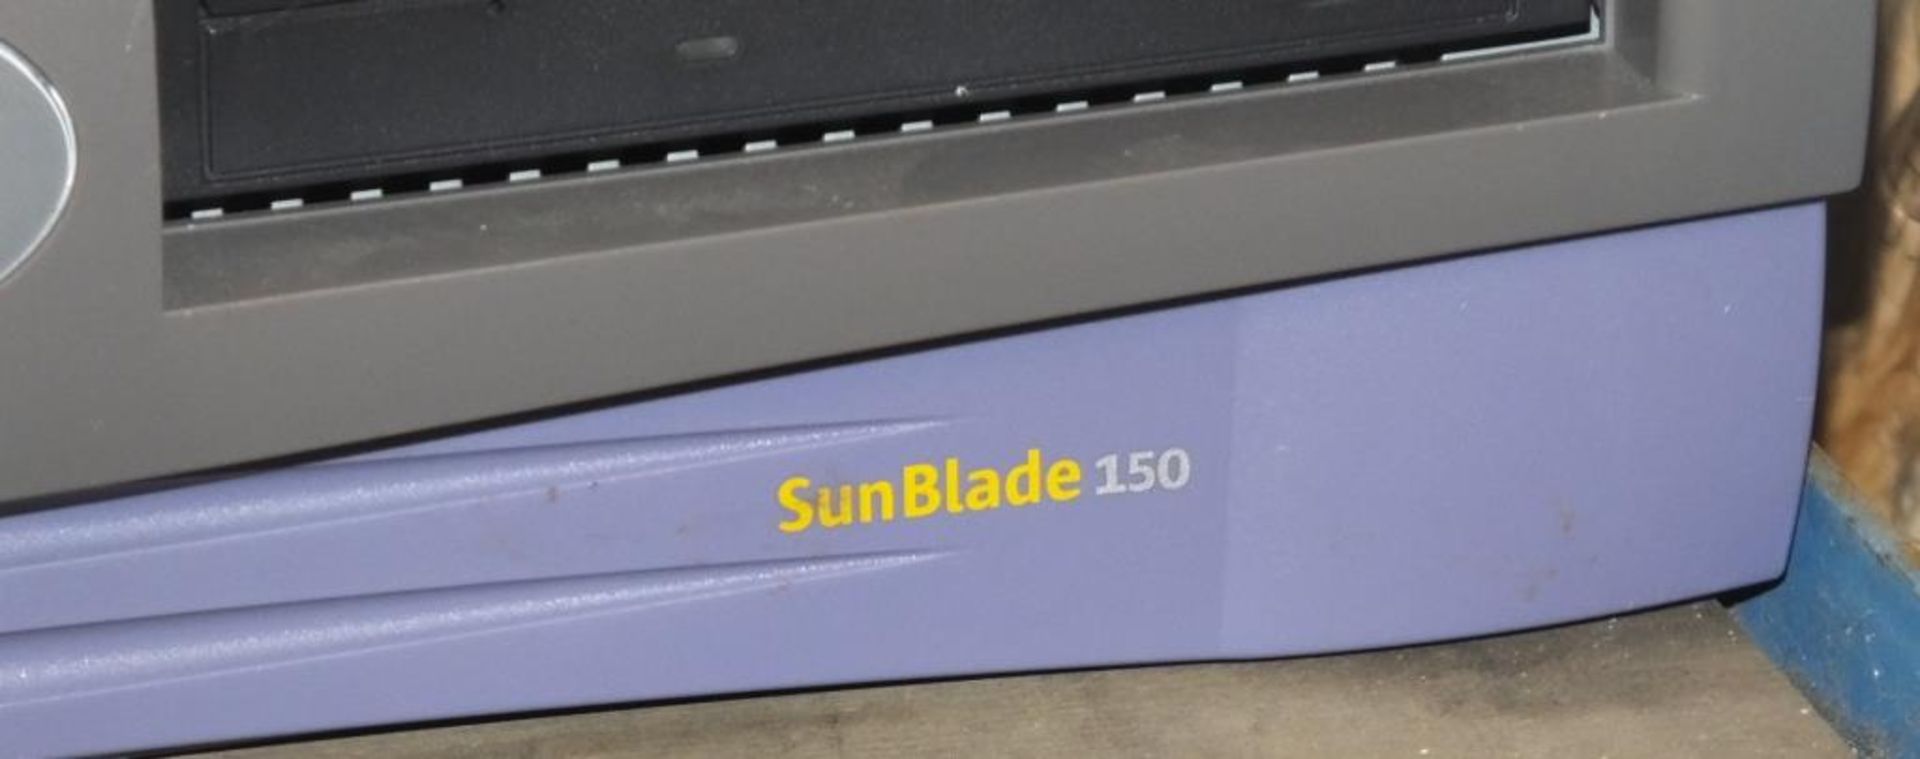 Sun blade PC 150 - Image 3 of 3